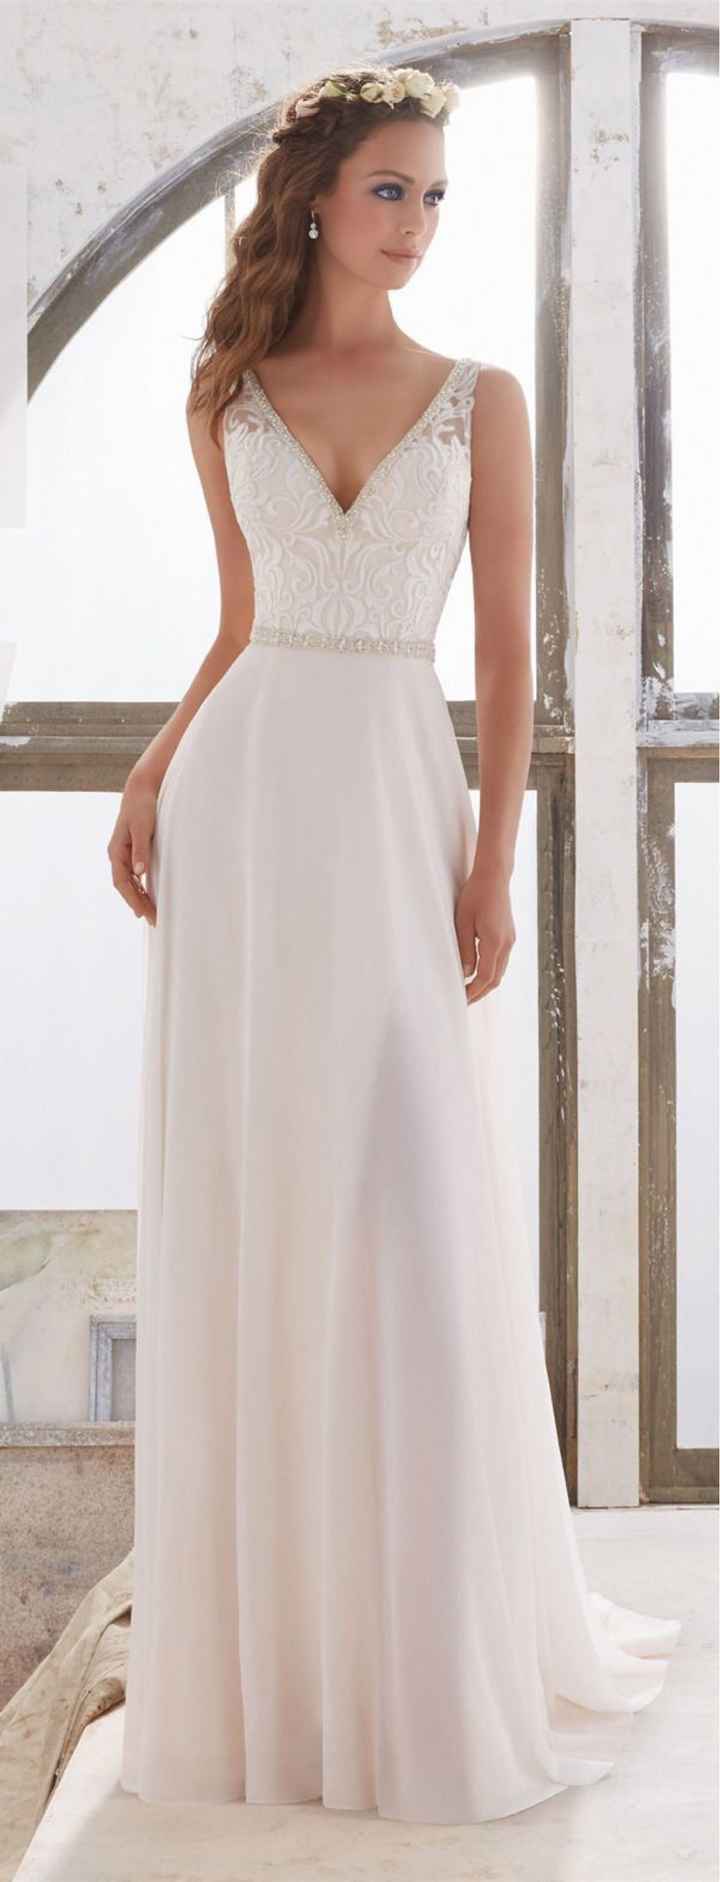 CHECKLIST: O meu vestido de noiva - 1